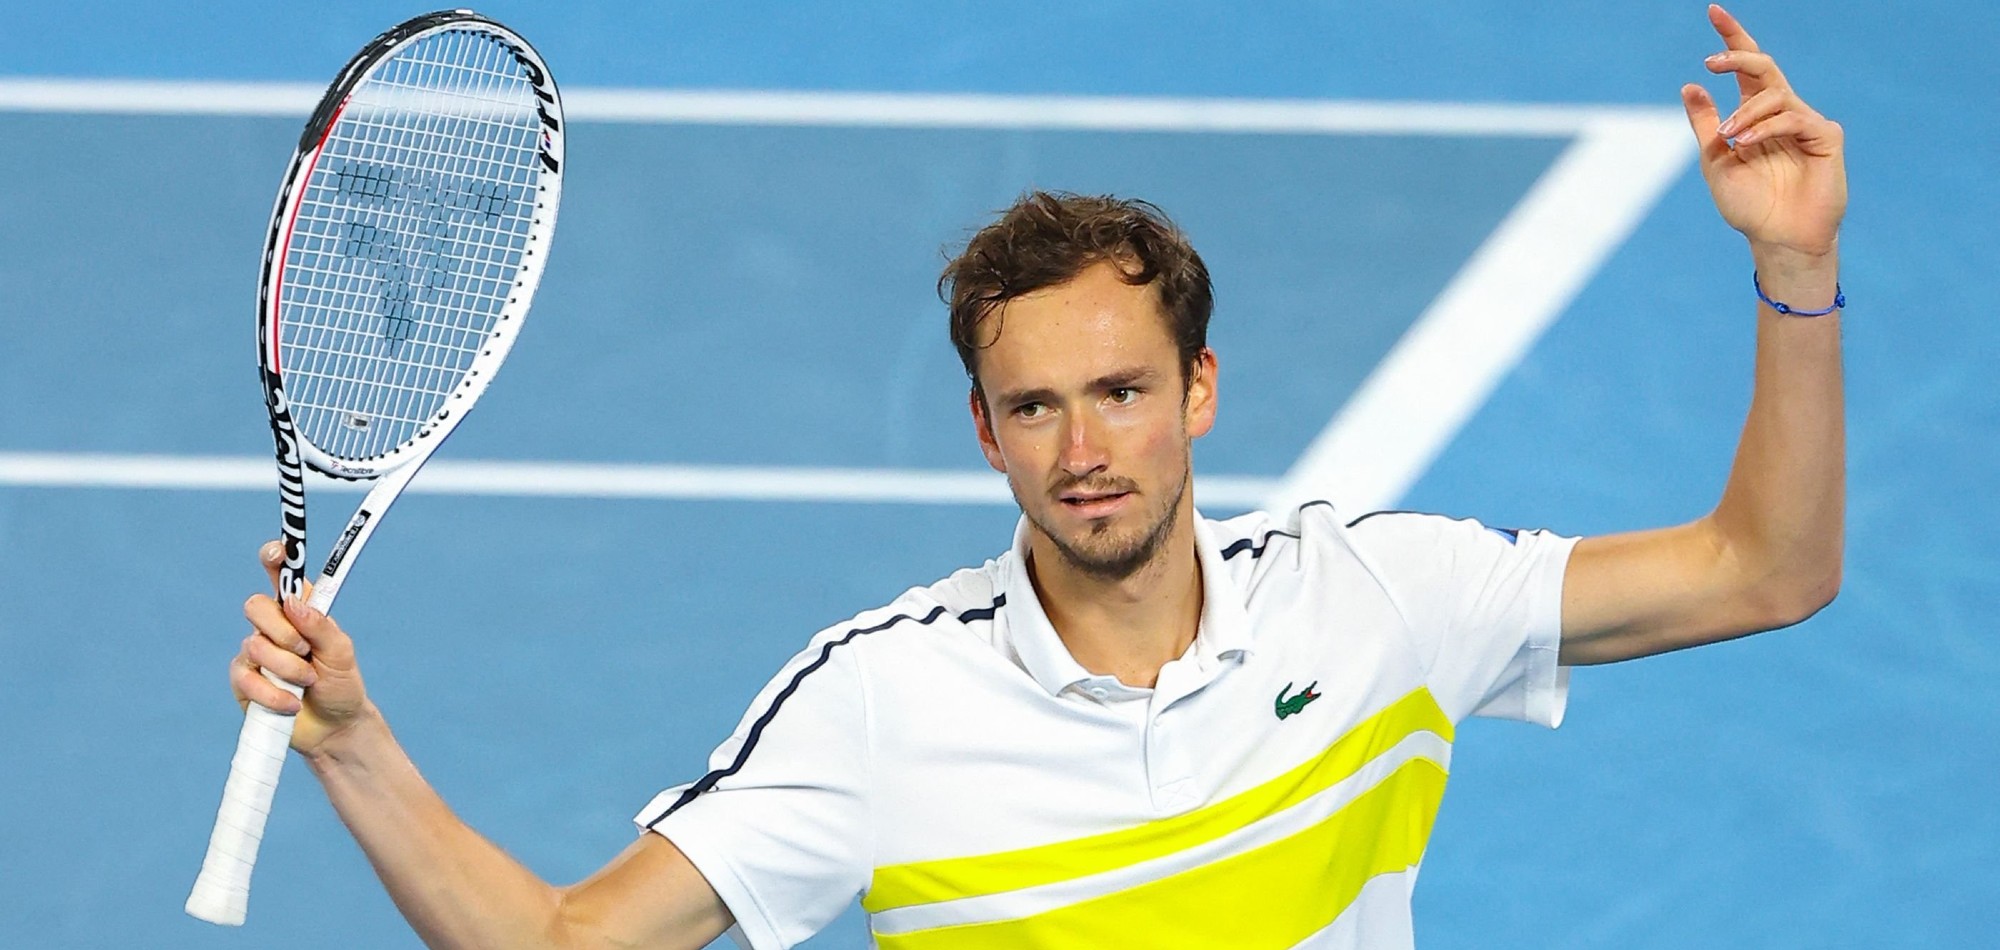 Daniil Medvedev moves to No. 2 in rankings, overtaking Nadal 